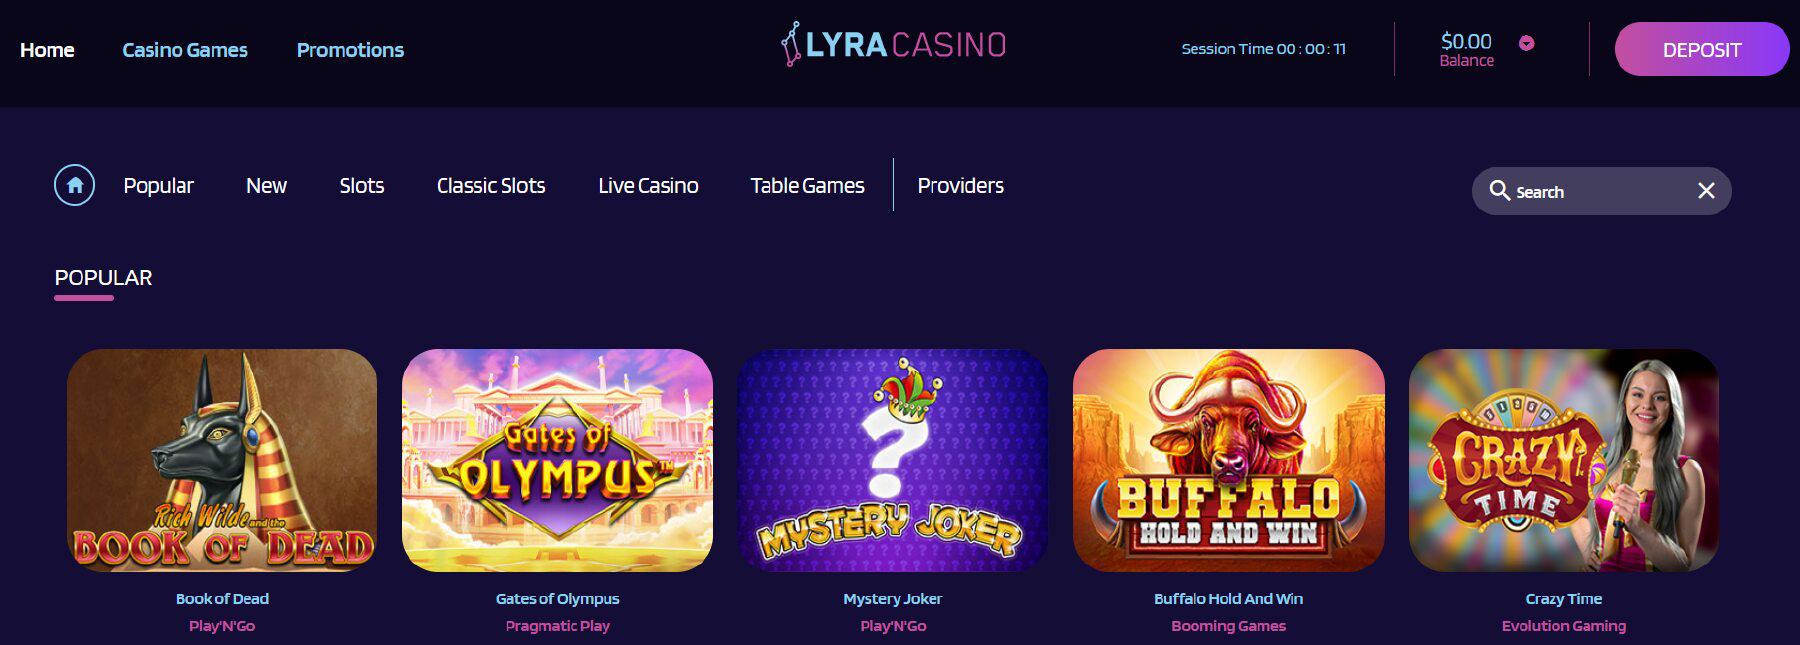 Screenshot of Lyra casino's landing page